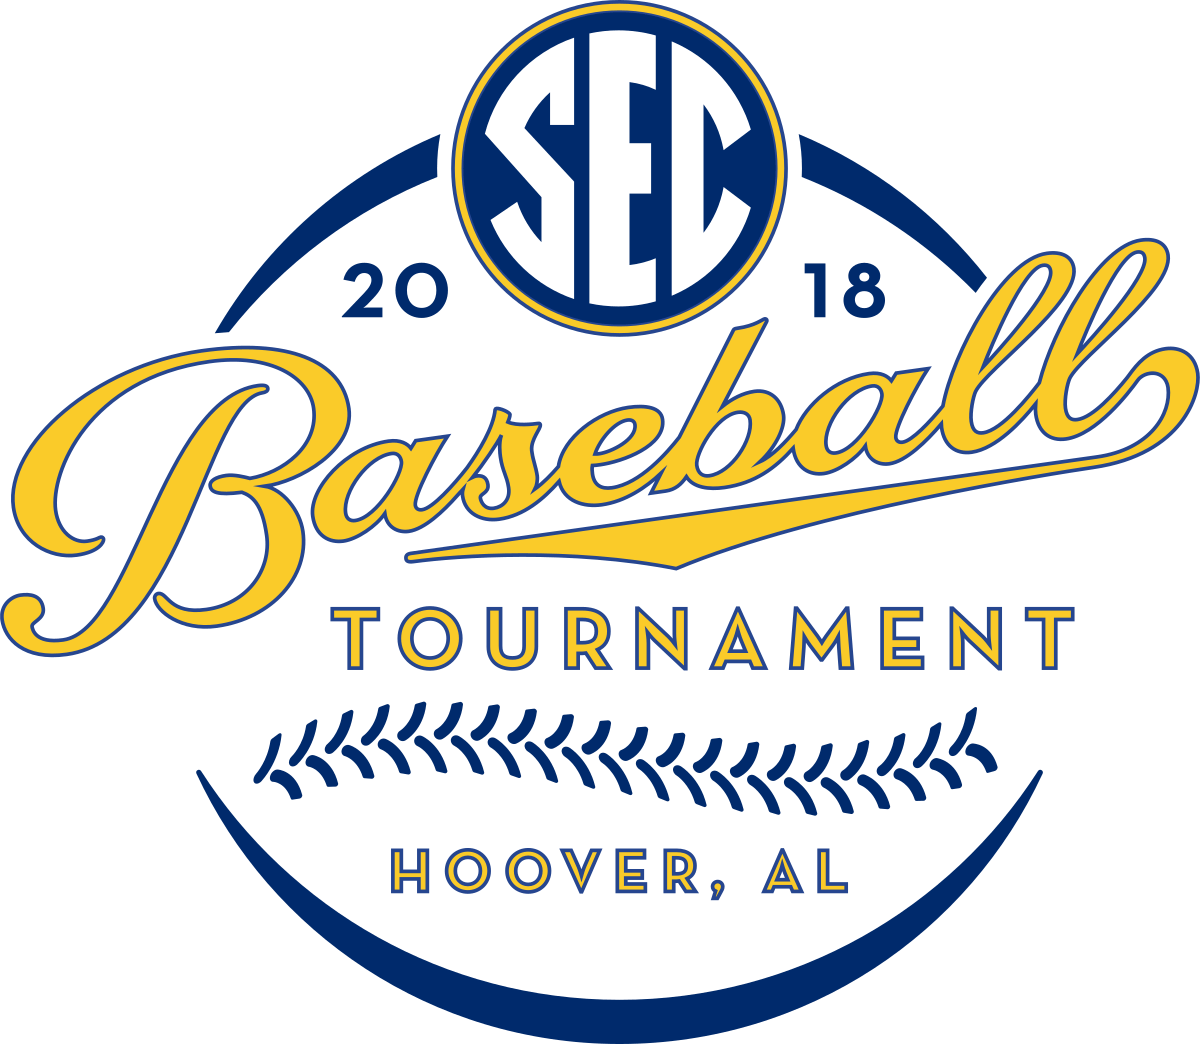 Tournament of Champions Logo - 2018 Southeastern Conference Baseball Tournament